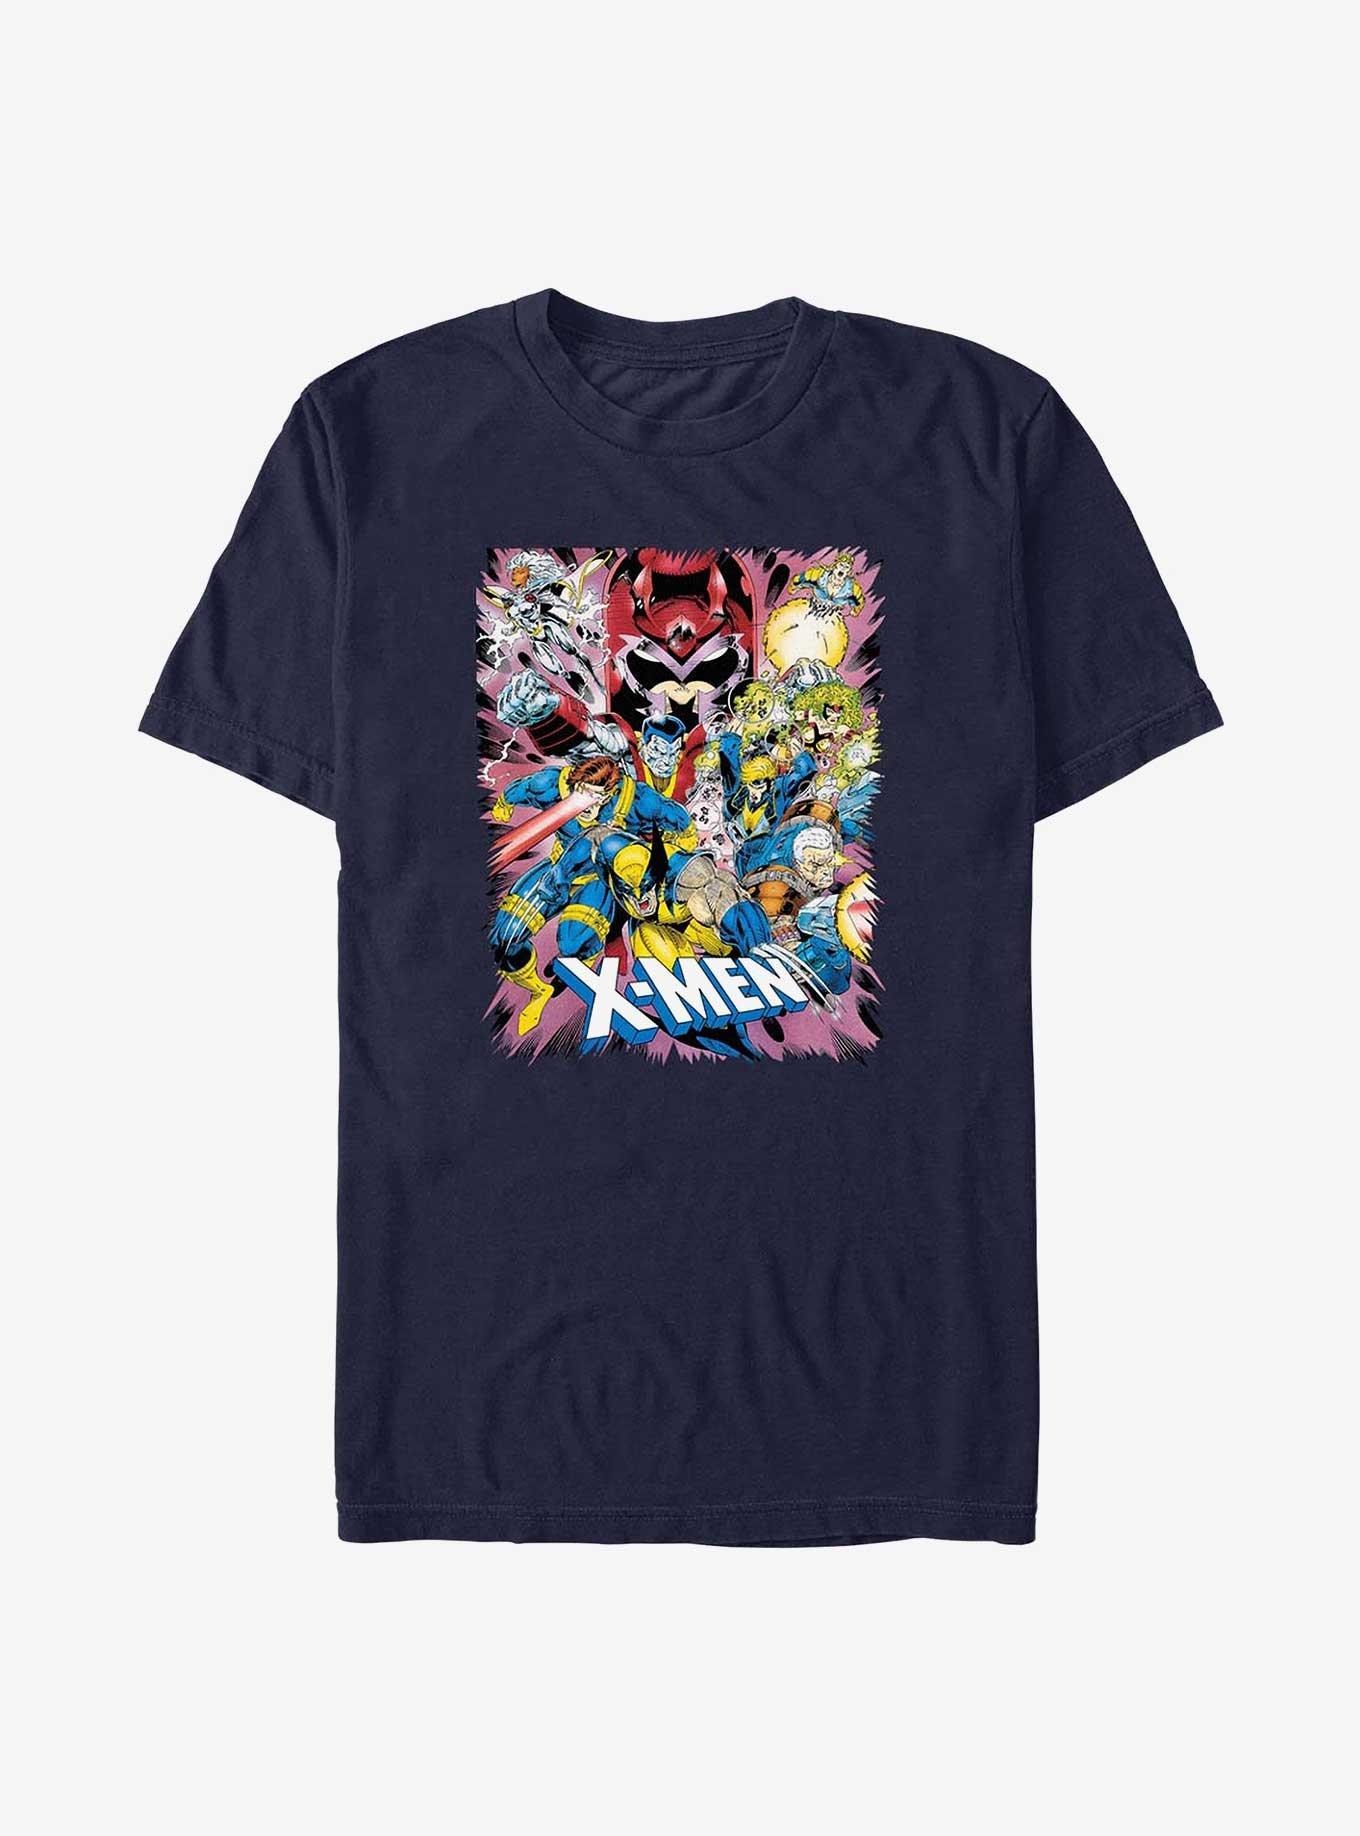 X-Men Jump Out T-Shirt, NAVY, hi-res